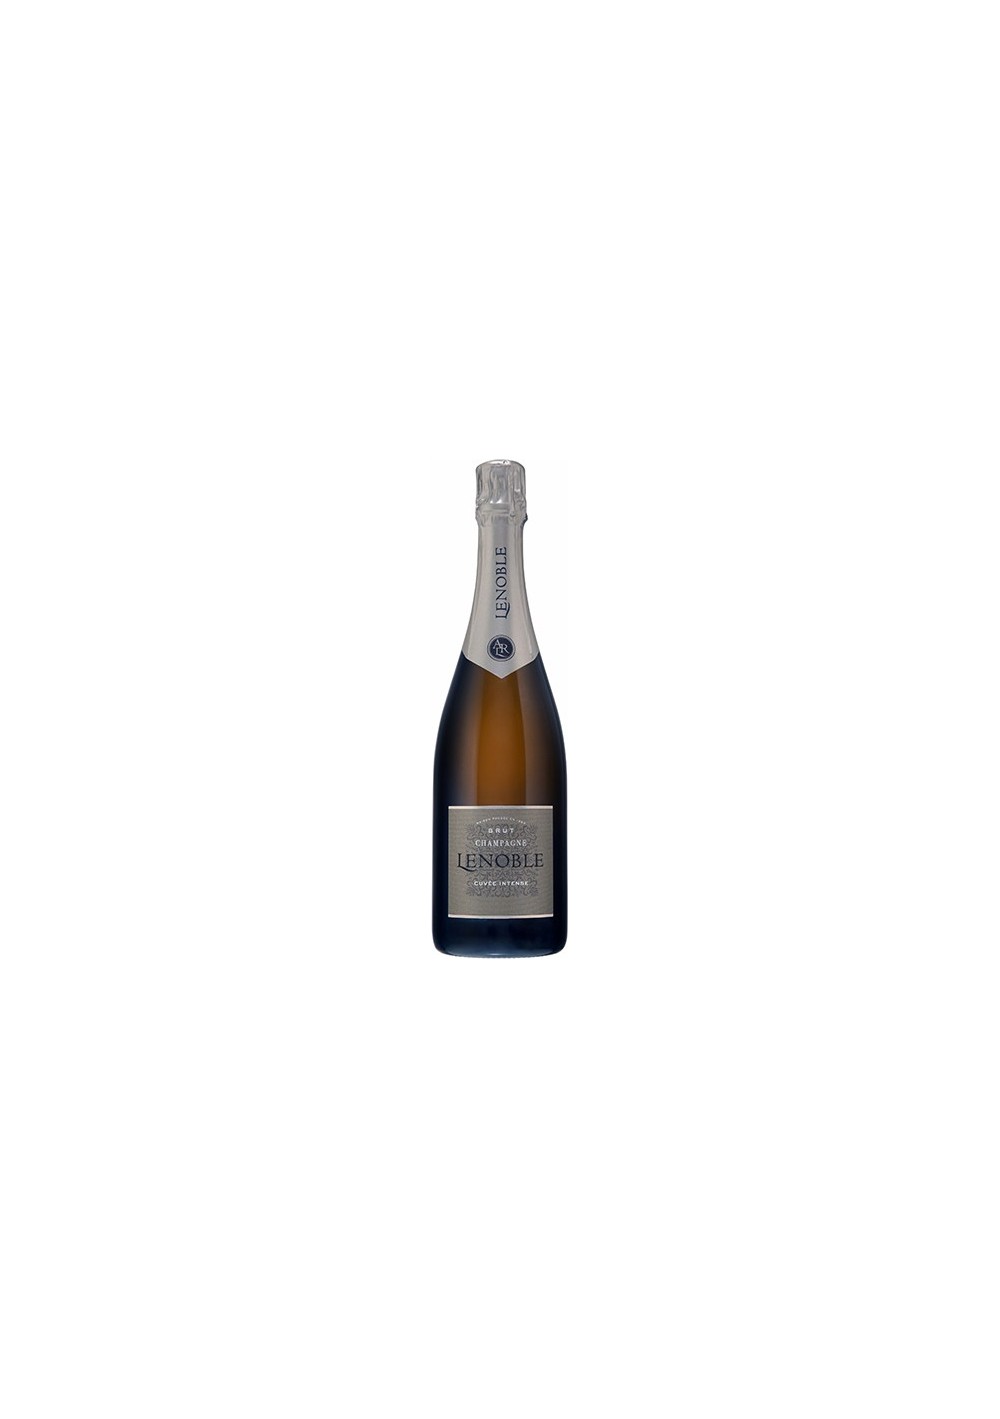 Champagne Lenoble "Cuvée Intense" Brut 75cl